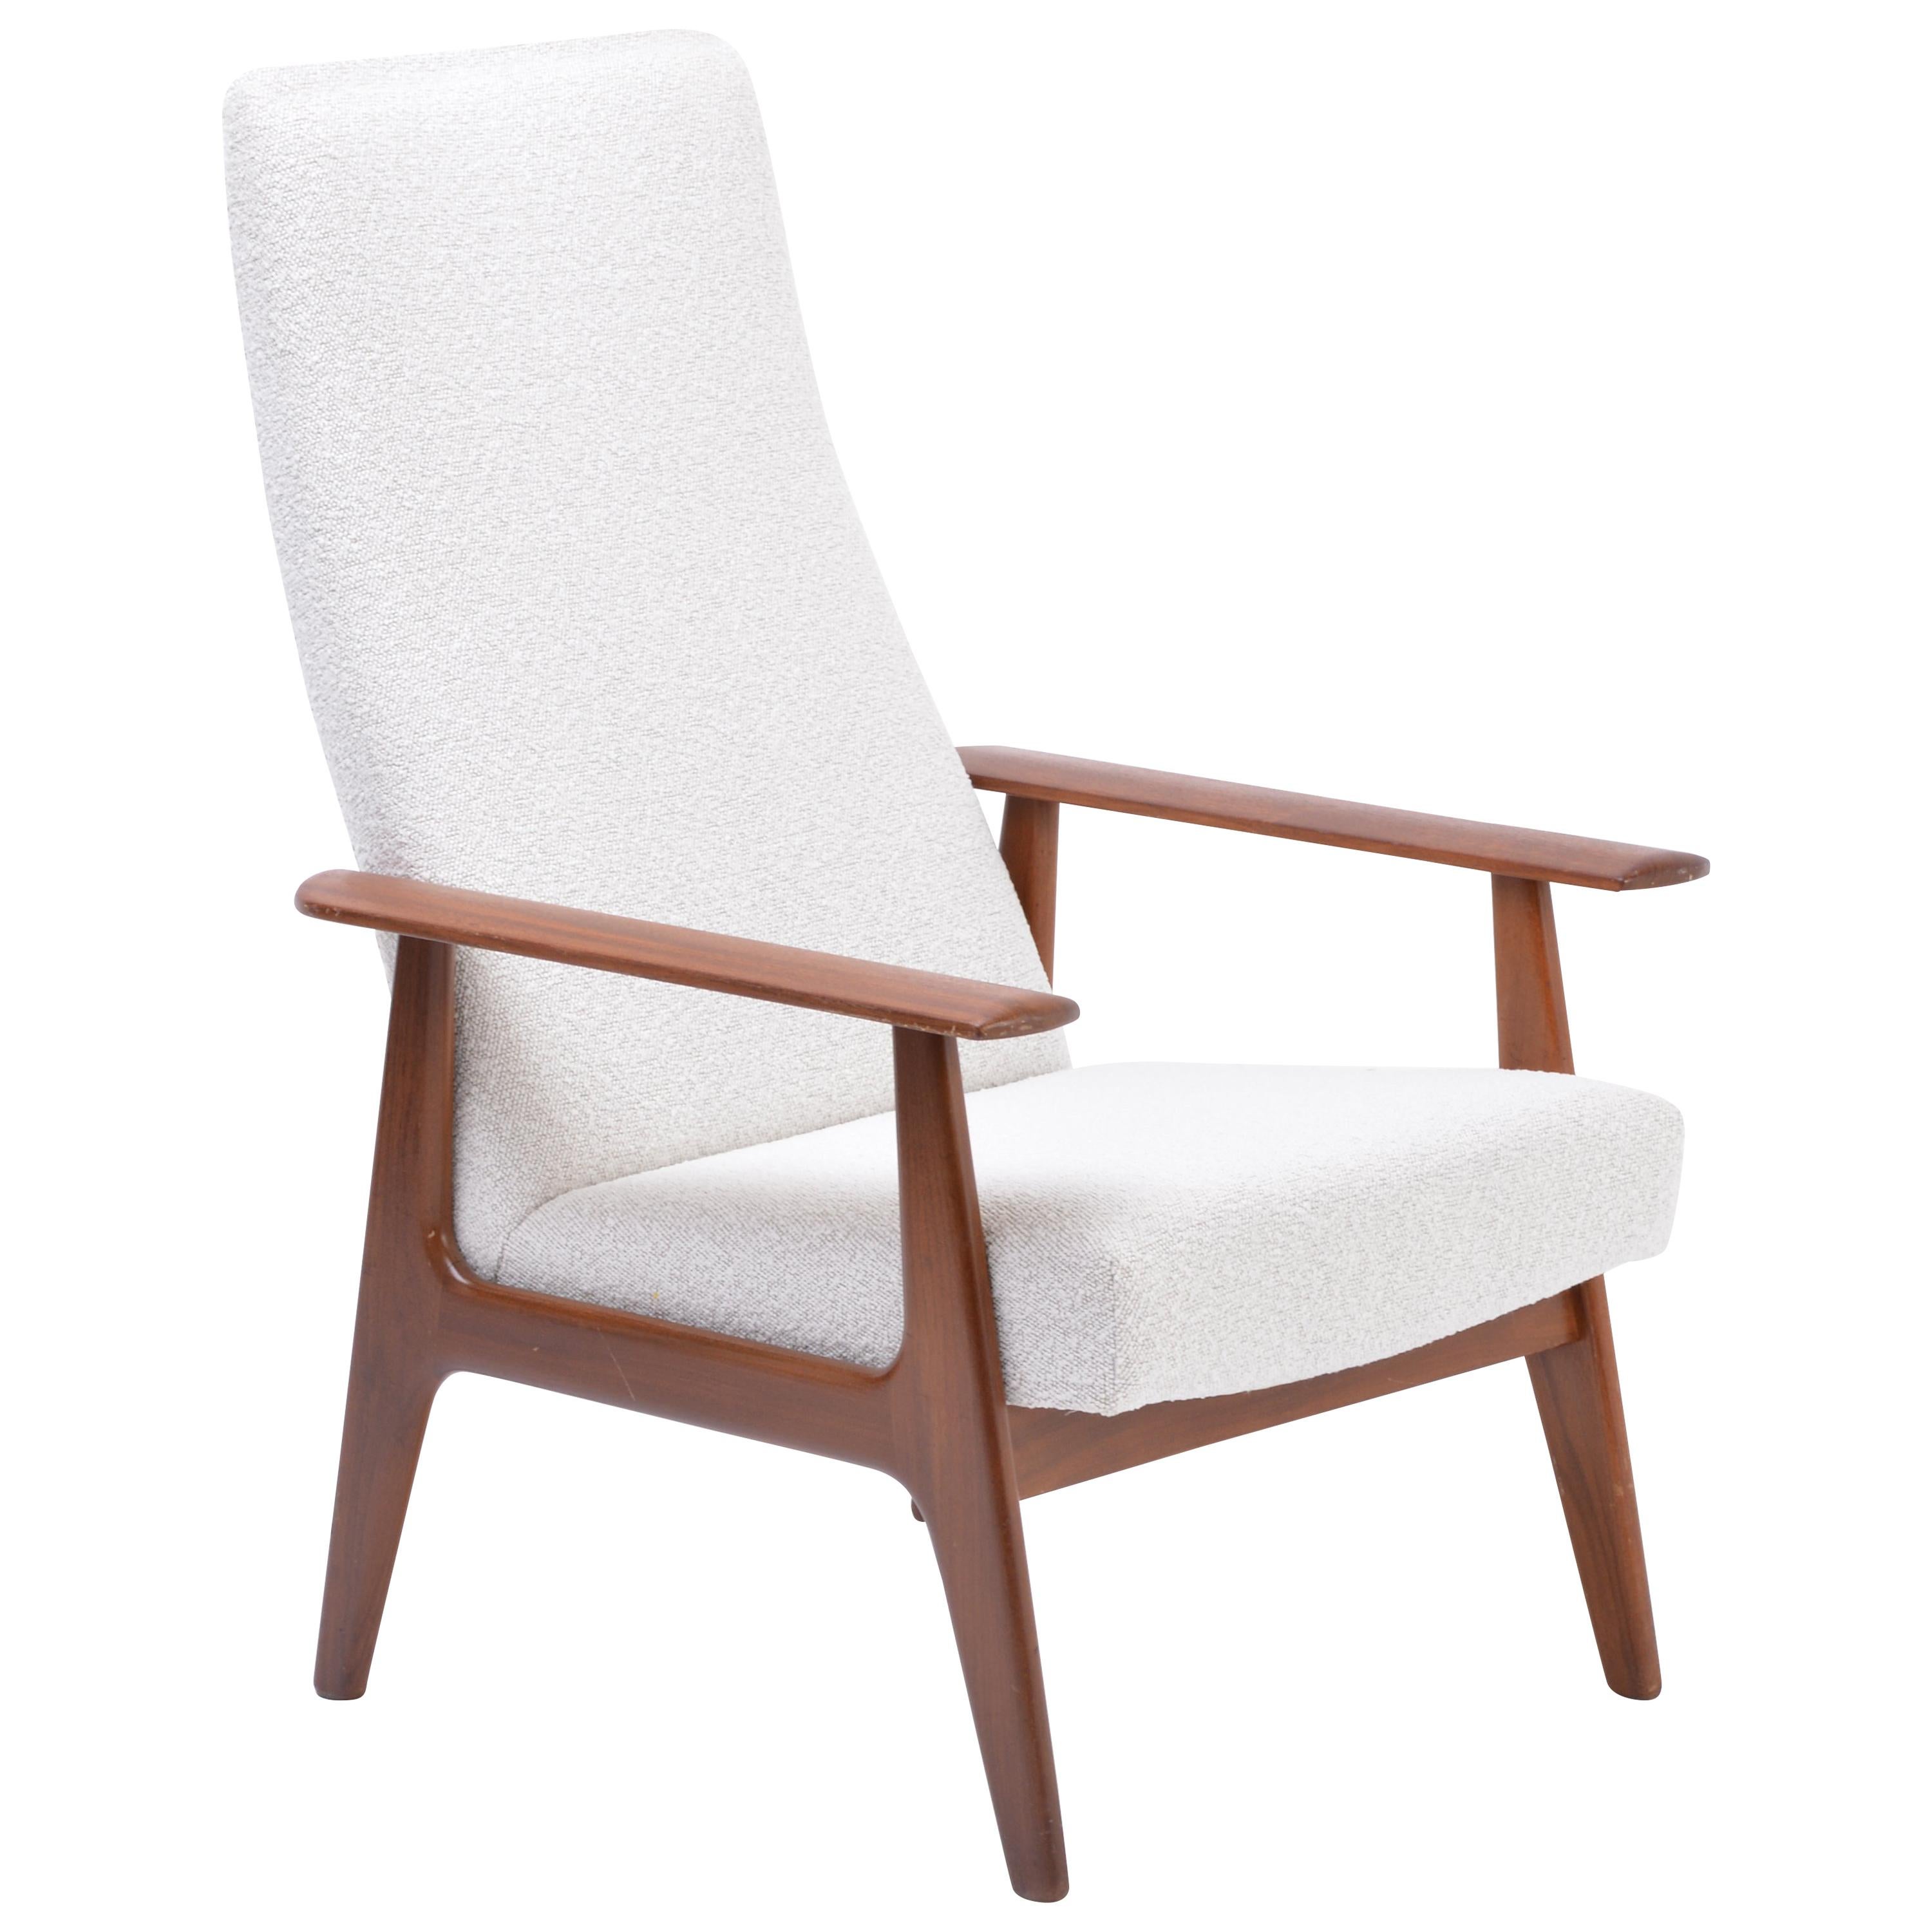 Dutch Mid-Century Modern Teak lounge chair by Topform reupholstered in Bouclé